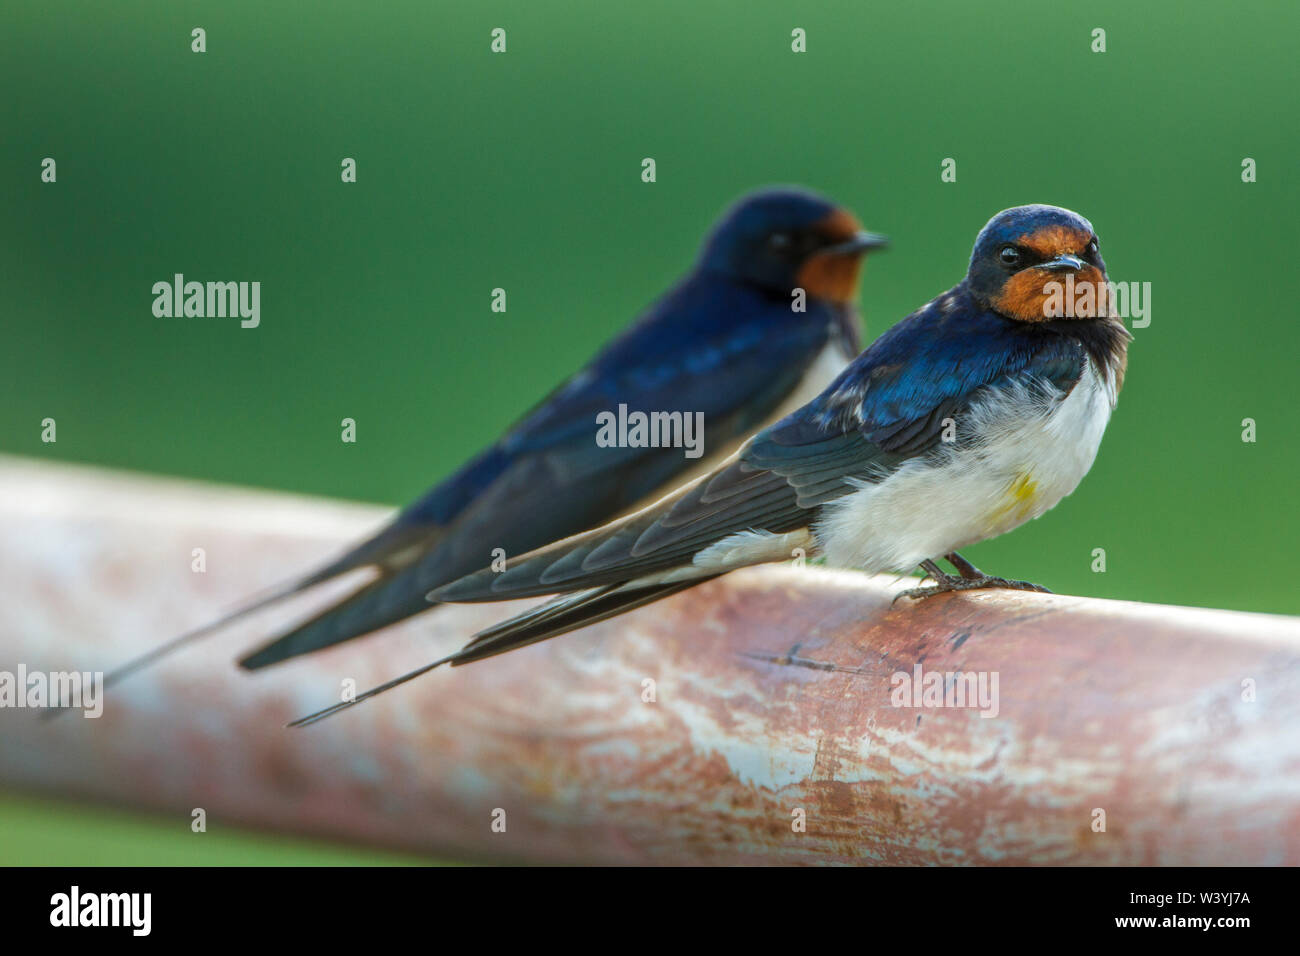 Barn swallow, Rauchschwalben (Hirundo rustica) Stock Photo